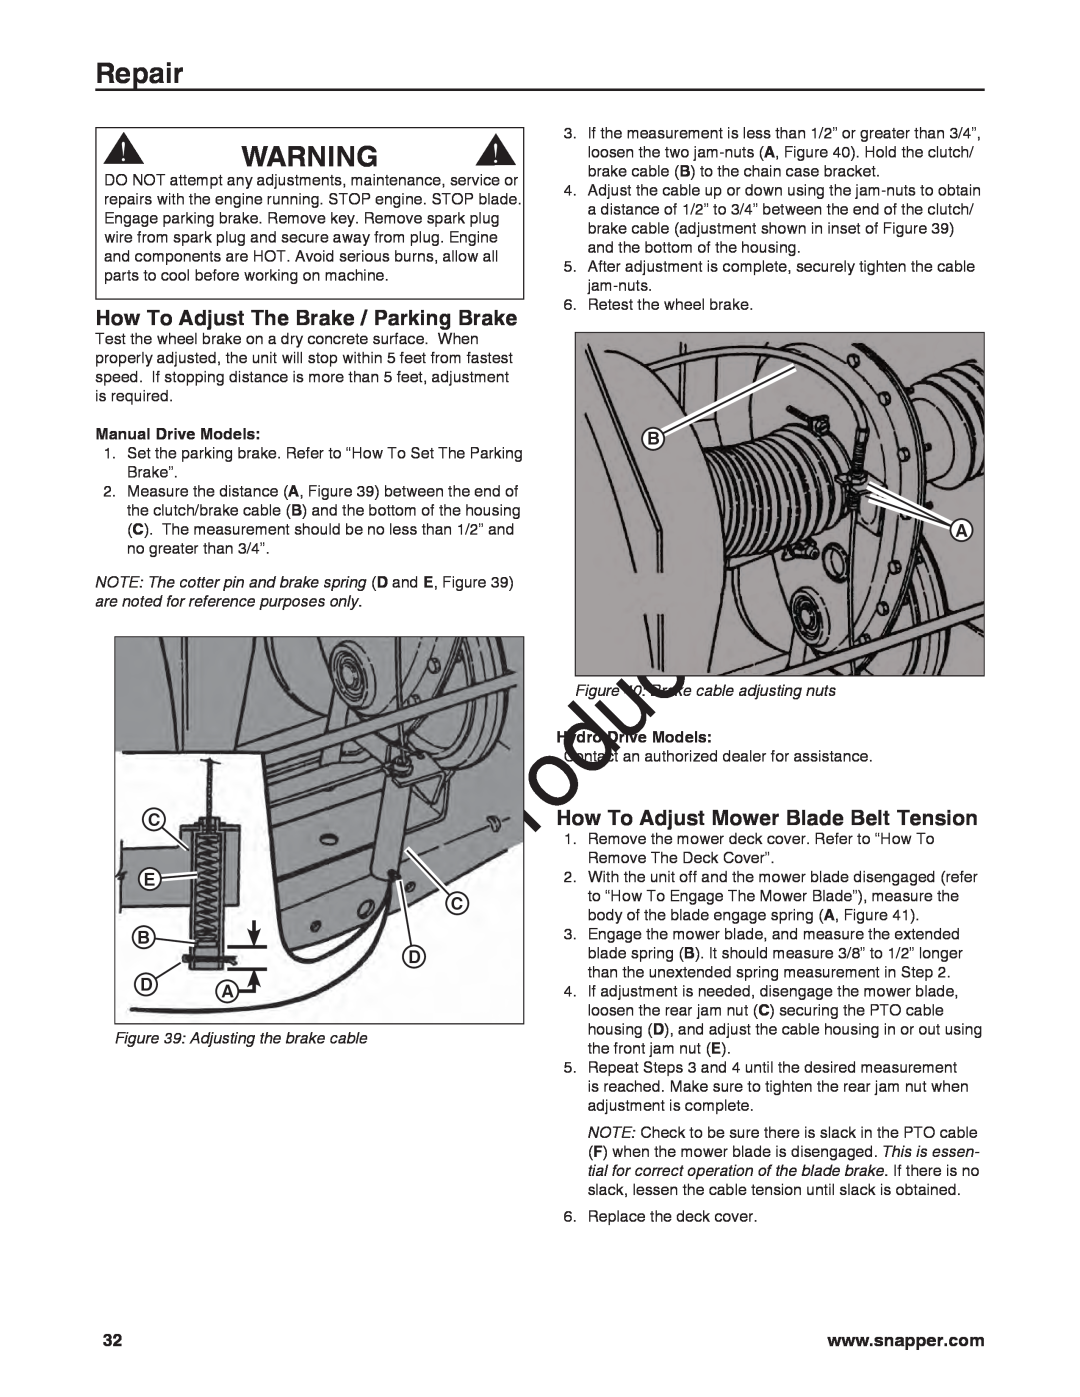 Briggs & Stratton 7800918-00 manual How To Adjust The Brake / Parking Brake, How To Adjust Mower Blade Belt Tension, Repair 